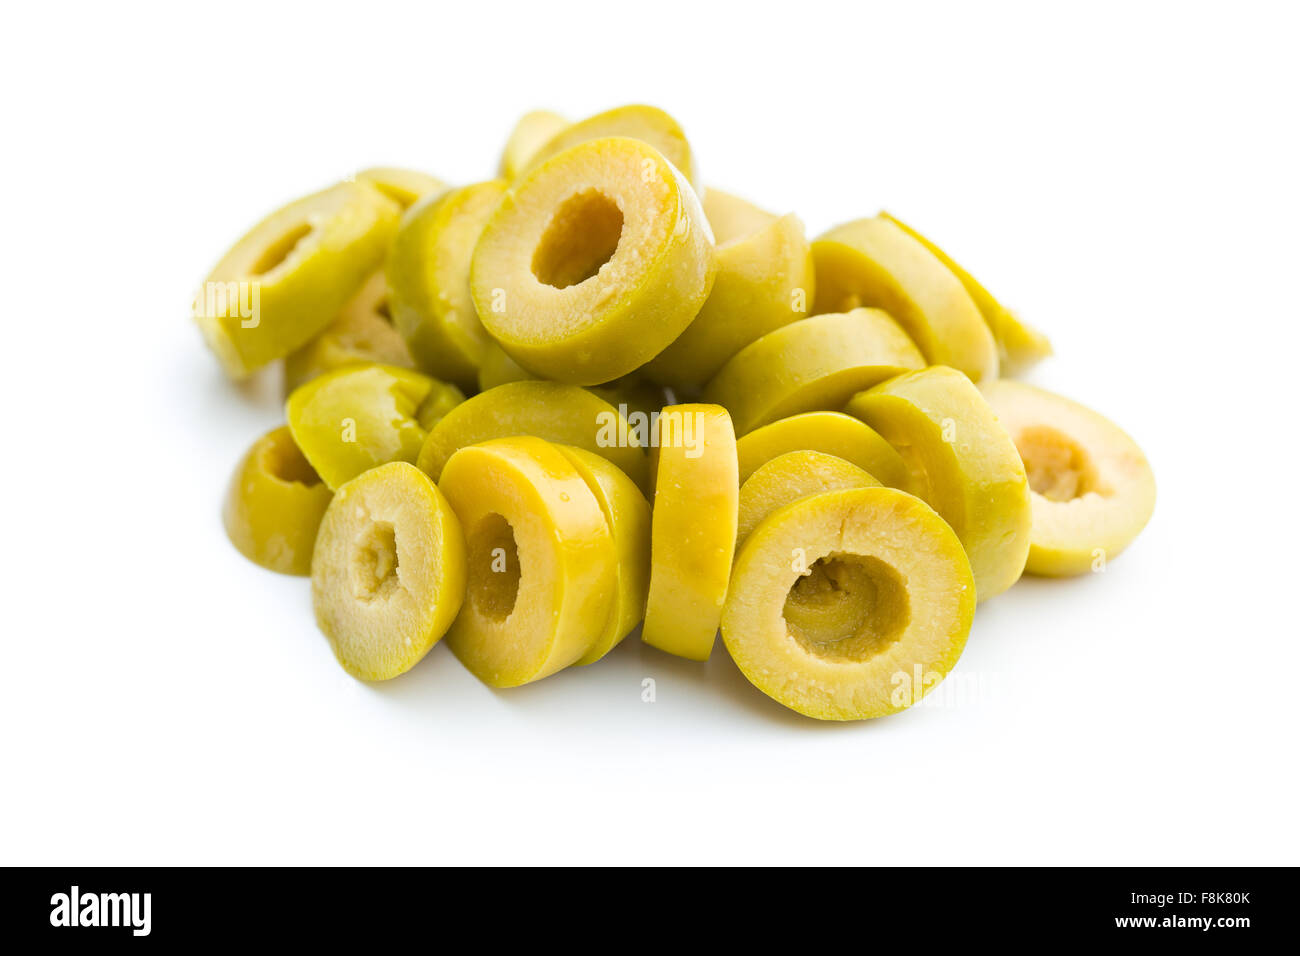 Olives vertes en rondelles sur fond blanc Banque D'Images